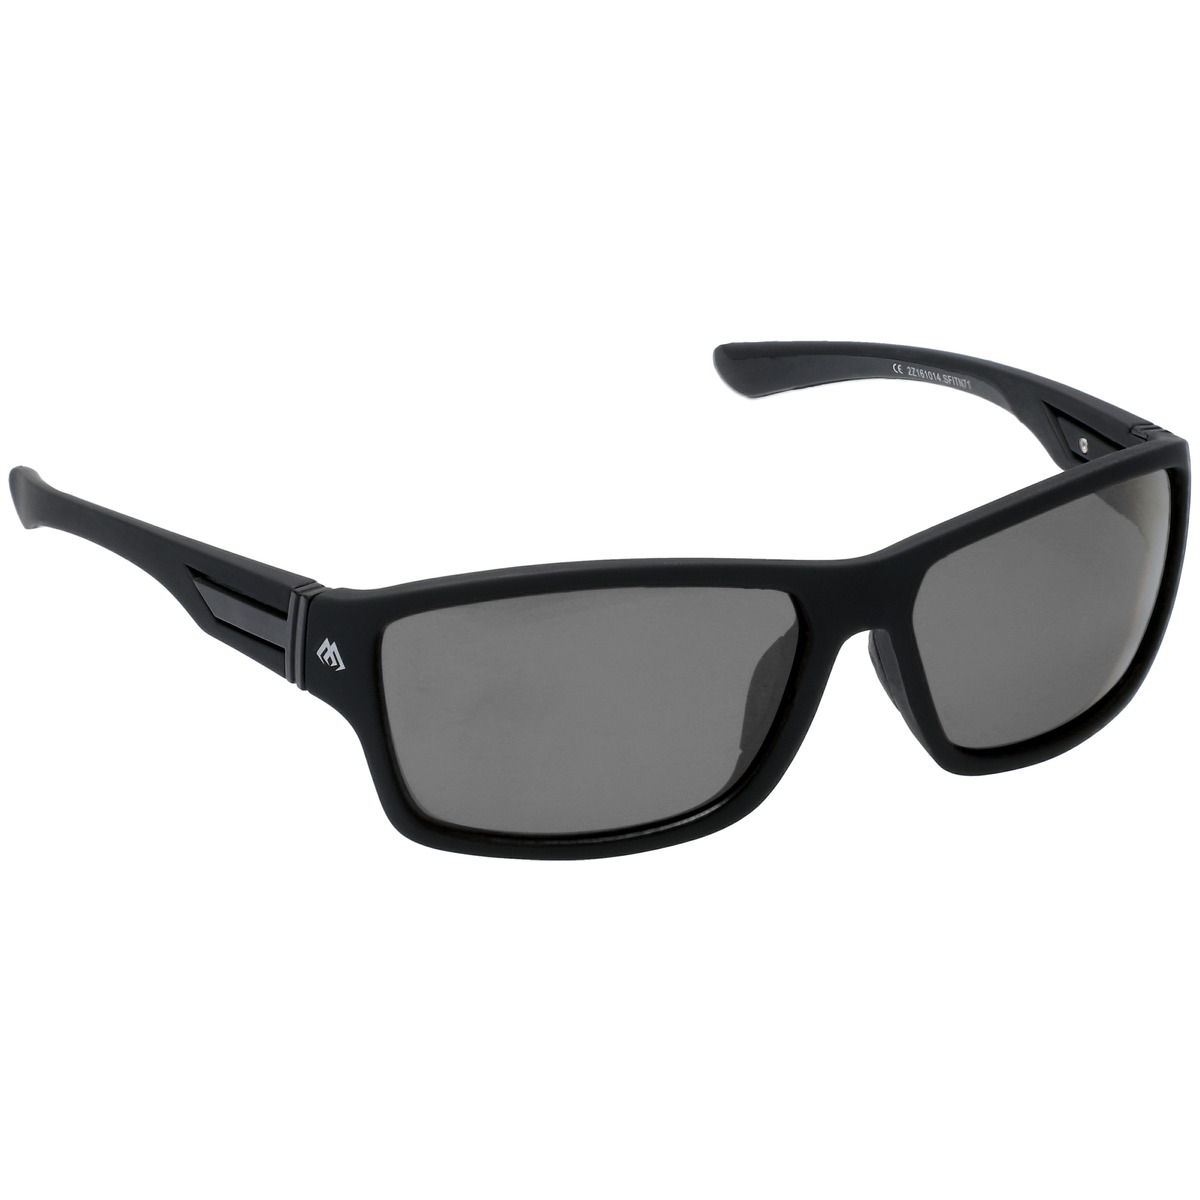 Mikado Sunglasses Polarized - 7773 GREY